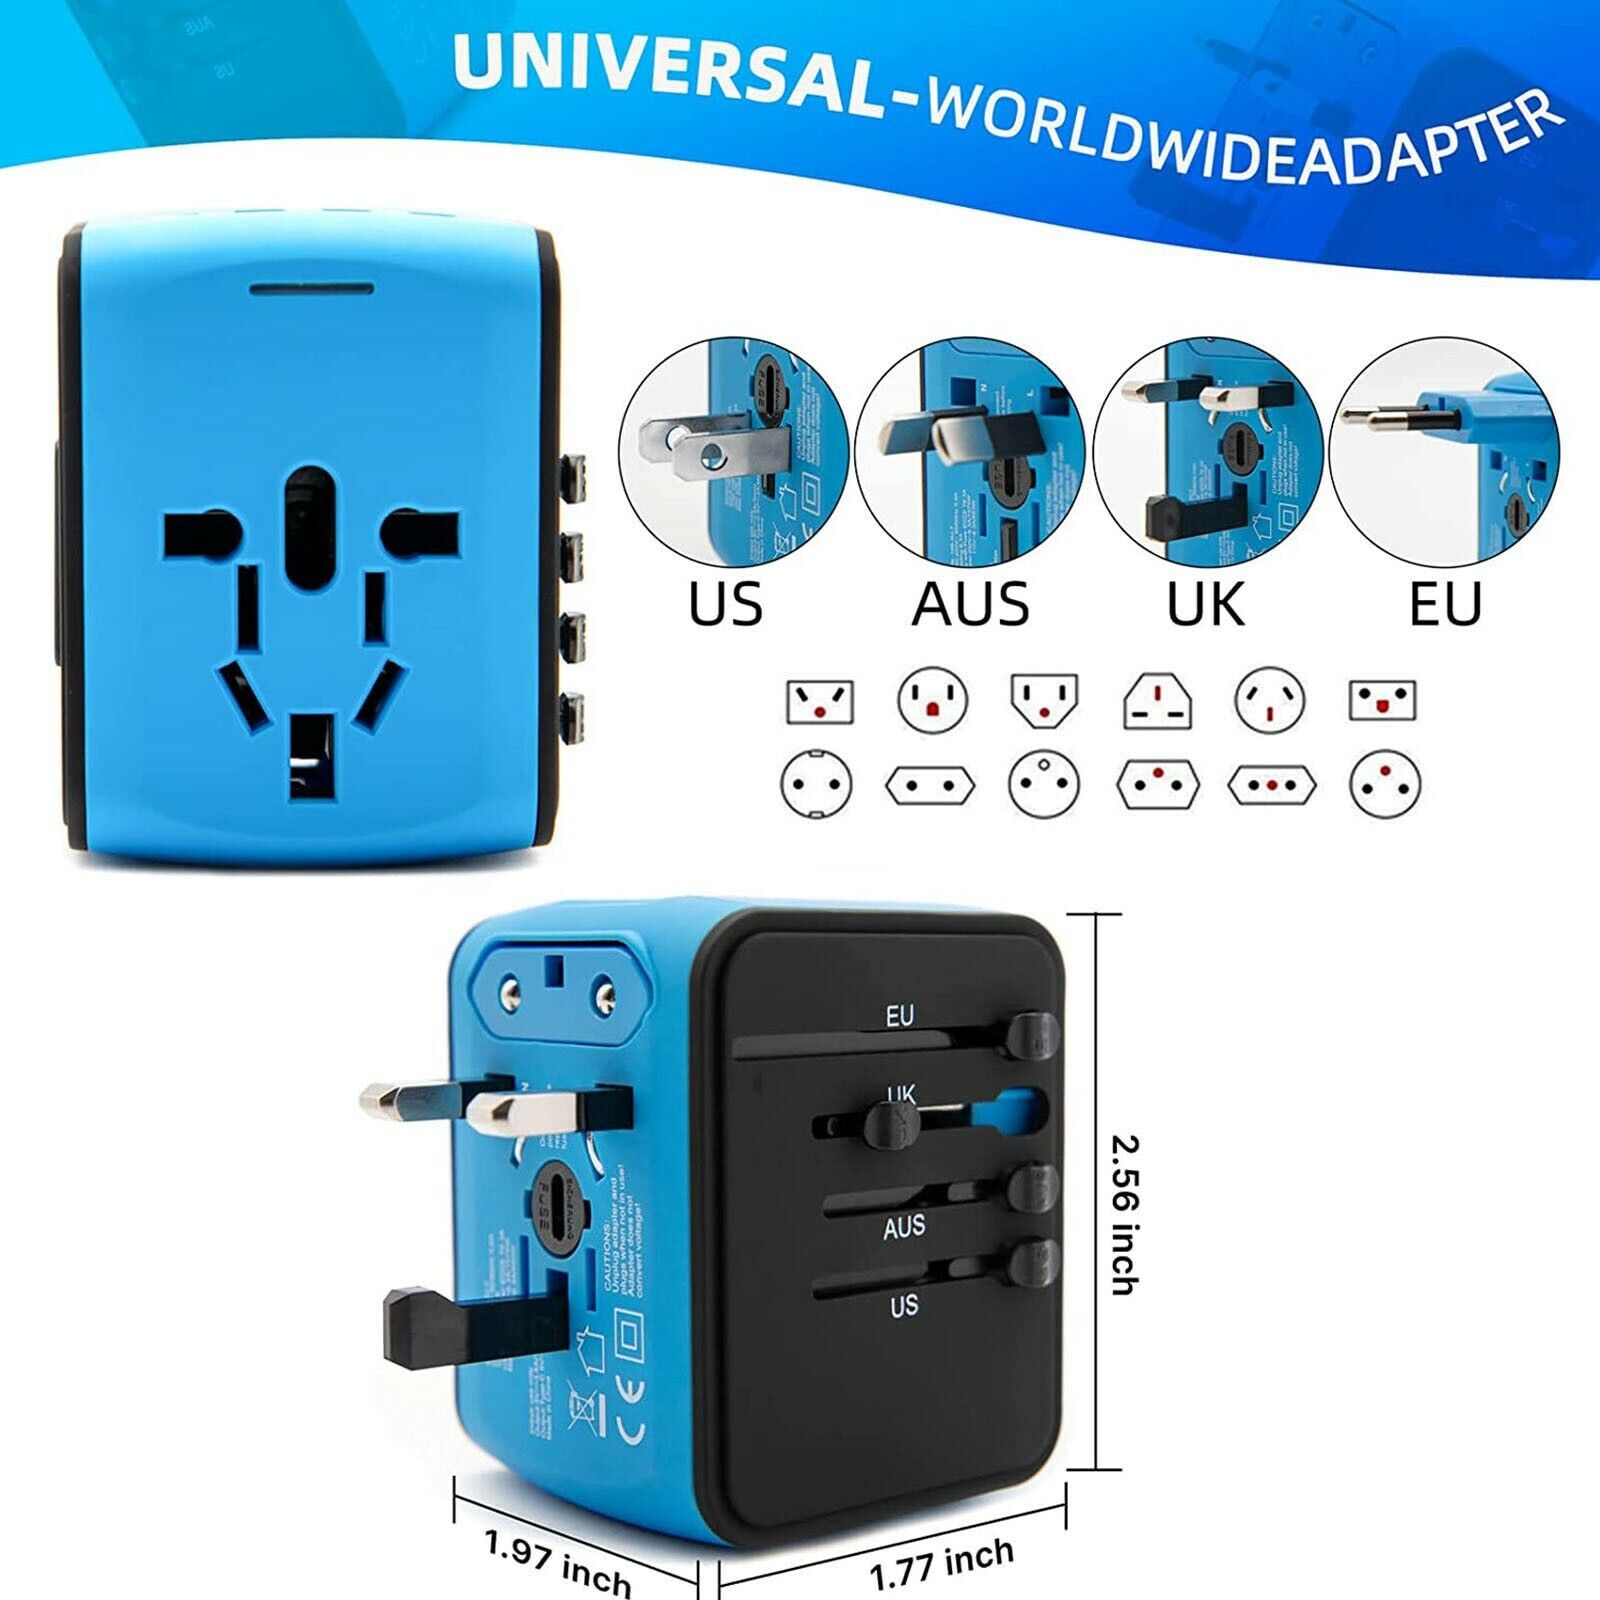 Universal Adapter International Power Adapter Charger for Australia, US, UK, EU